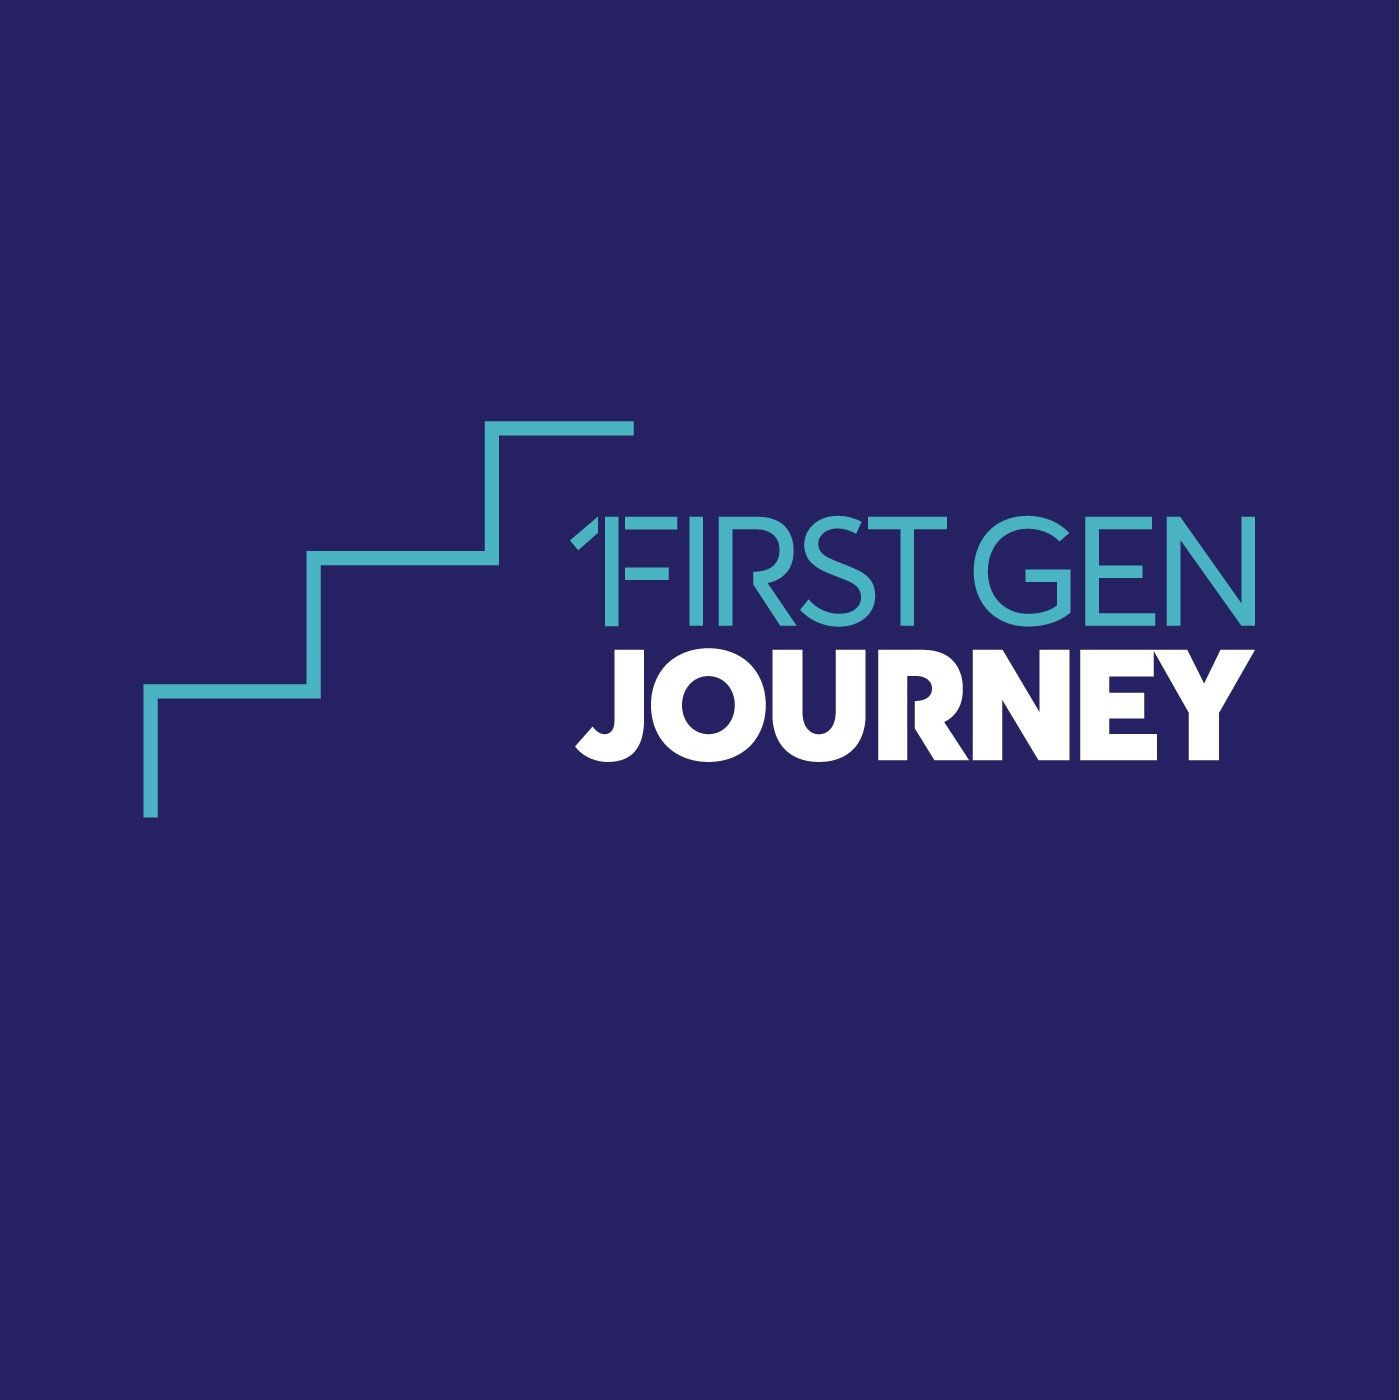 1st Gen Journey